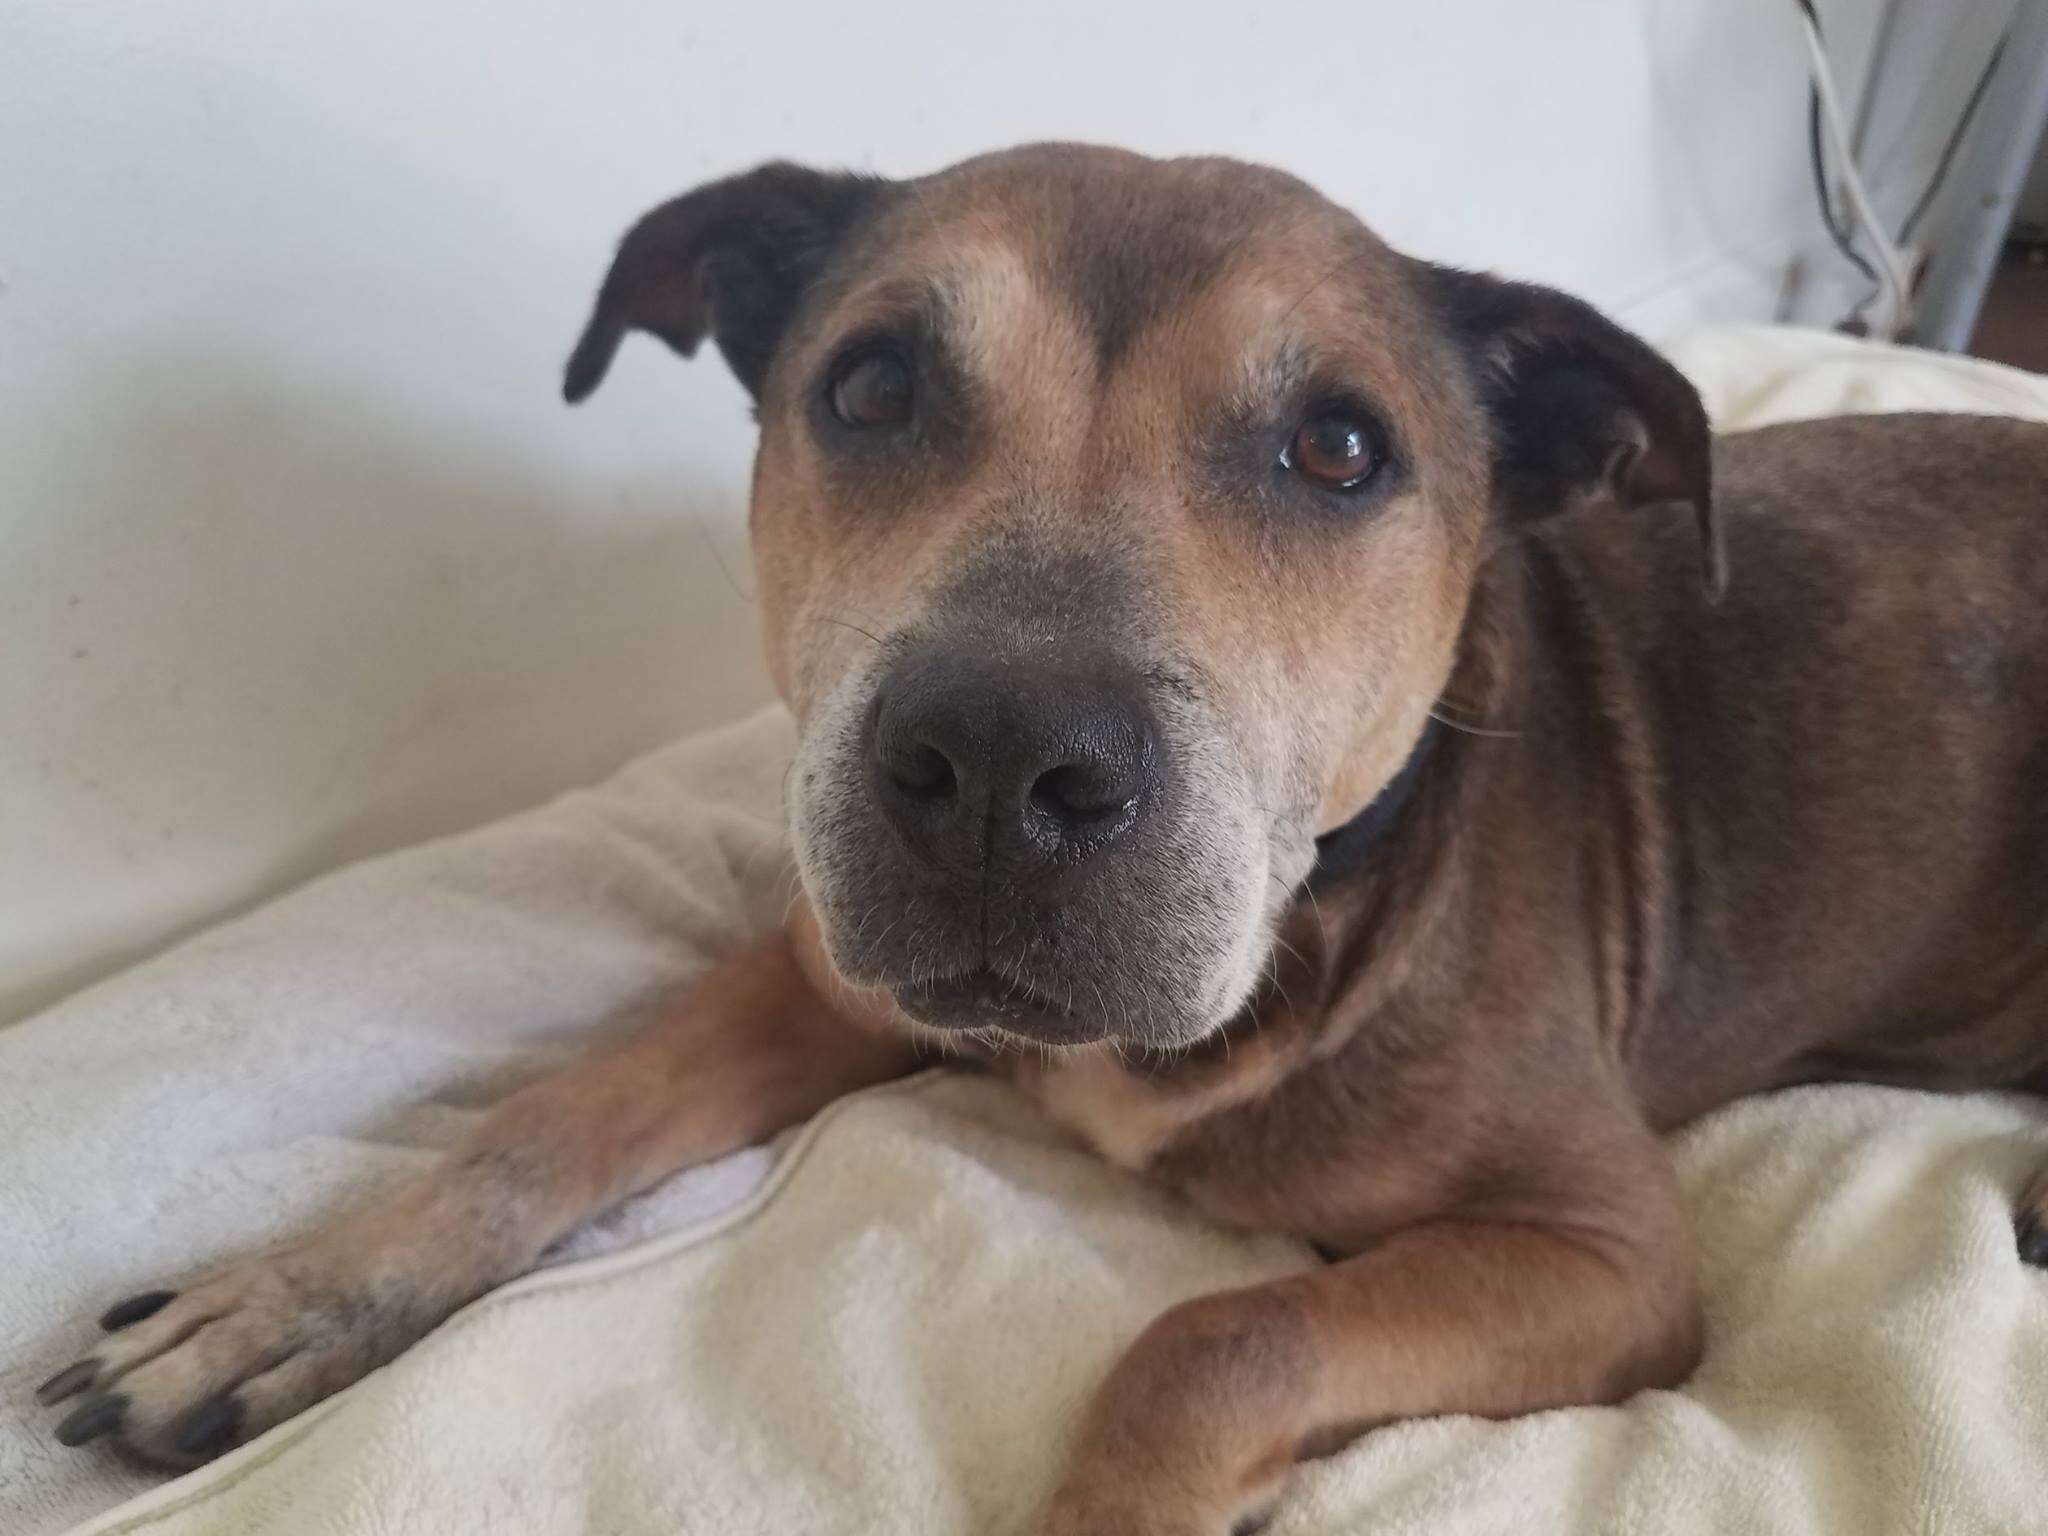 Arthritic senior dog saved from neglect